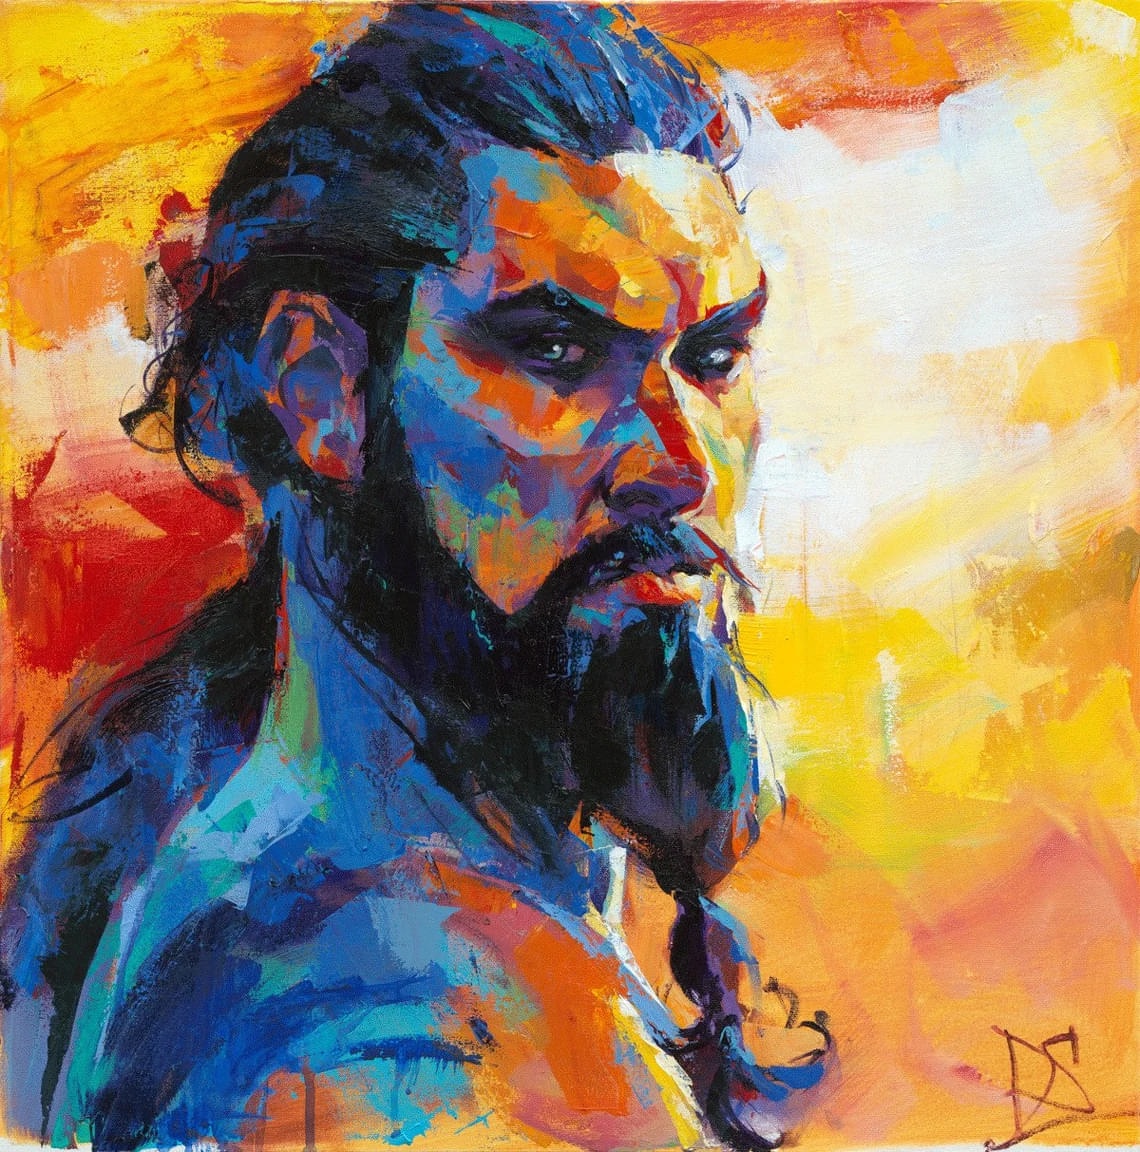 "Khal Drogo" - Game of Thrones Portraits Artwork